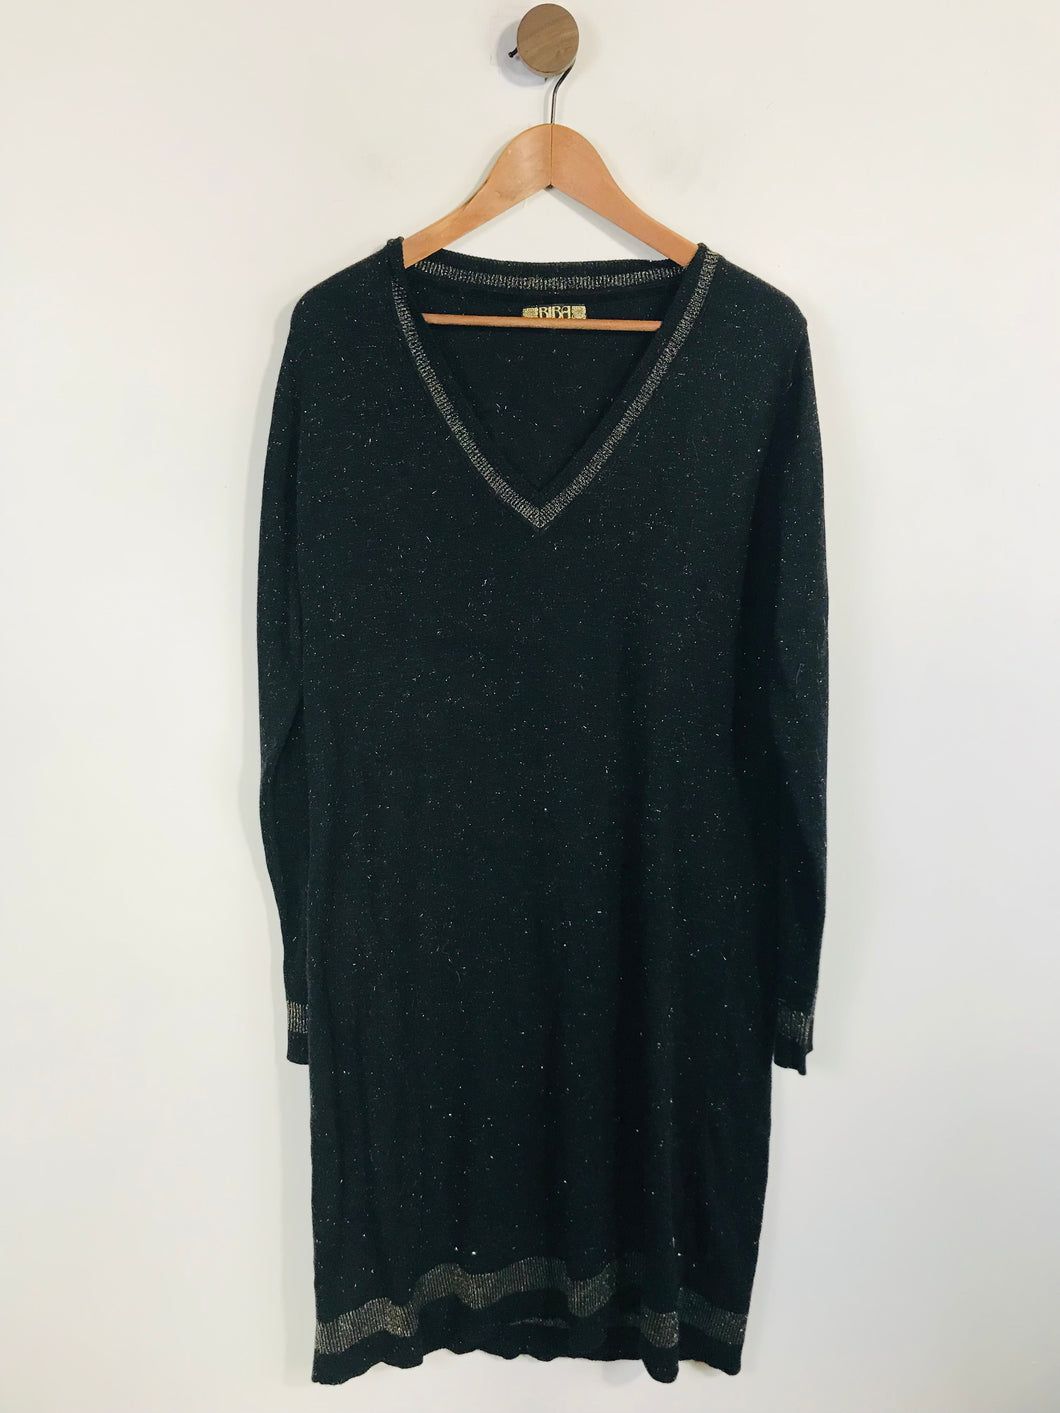 Biba Women's Knit Sparkly Sheath Dress | L UK14 | Black